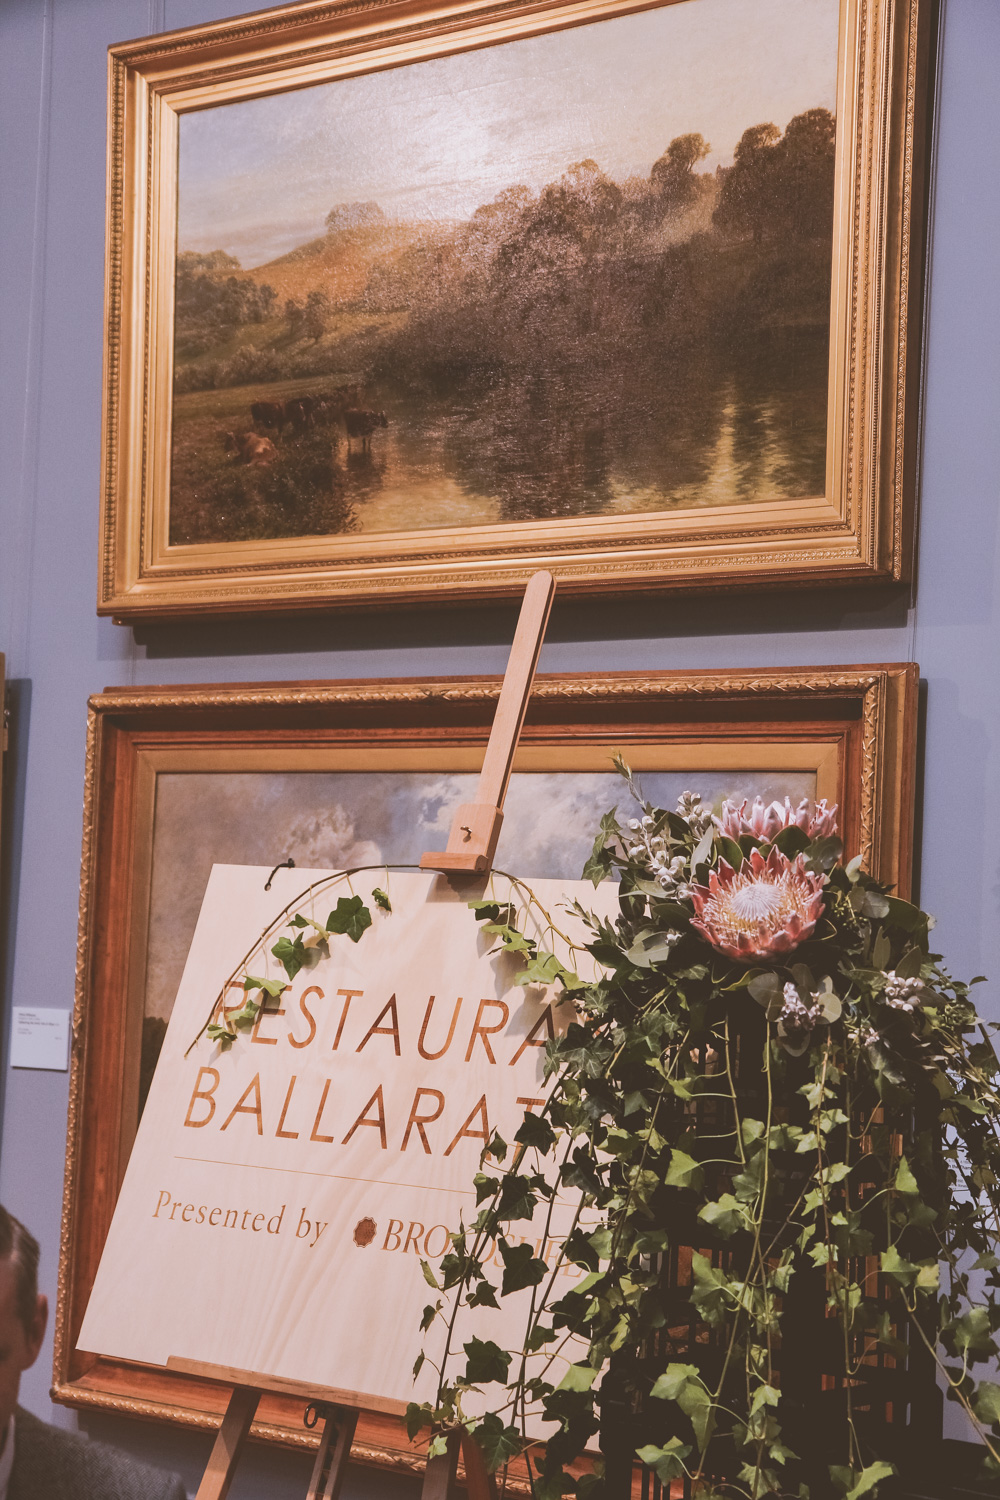 Restaurant Ballarat at the Art Gallery of Ballarat presented by Broadsheet Melbourne